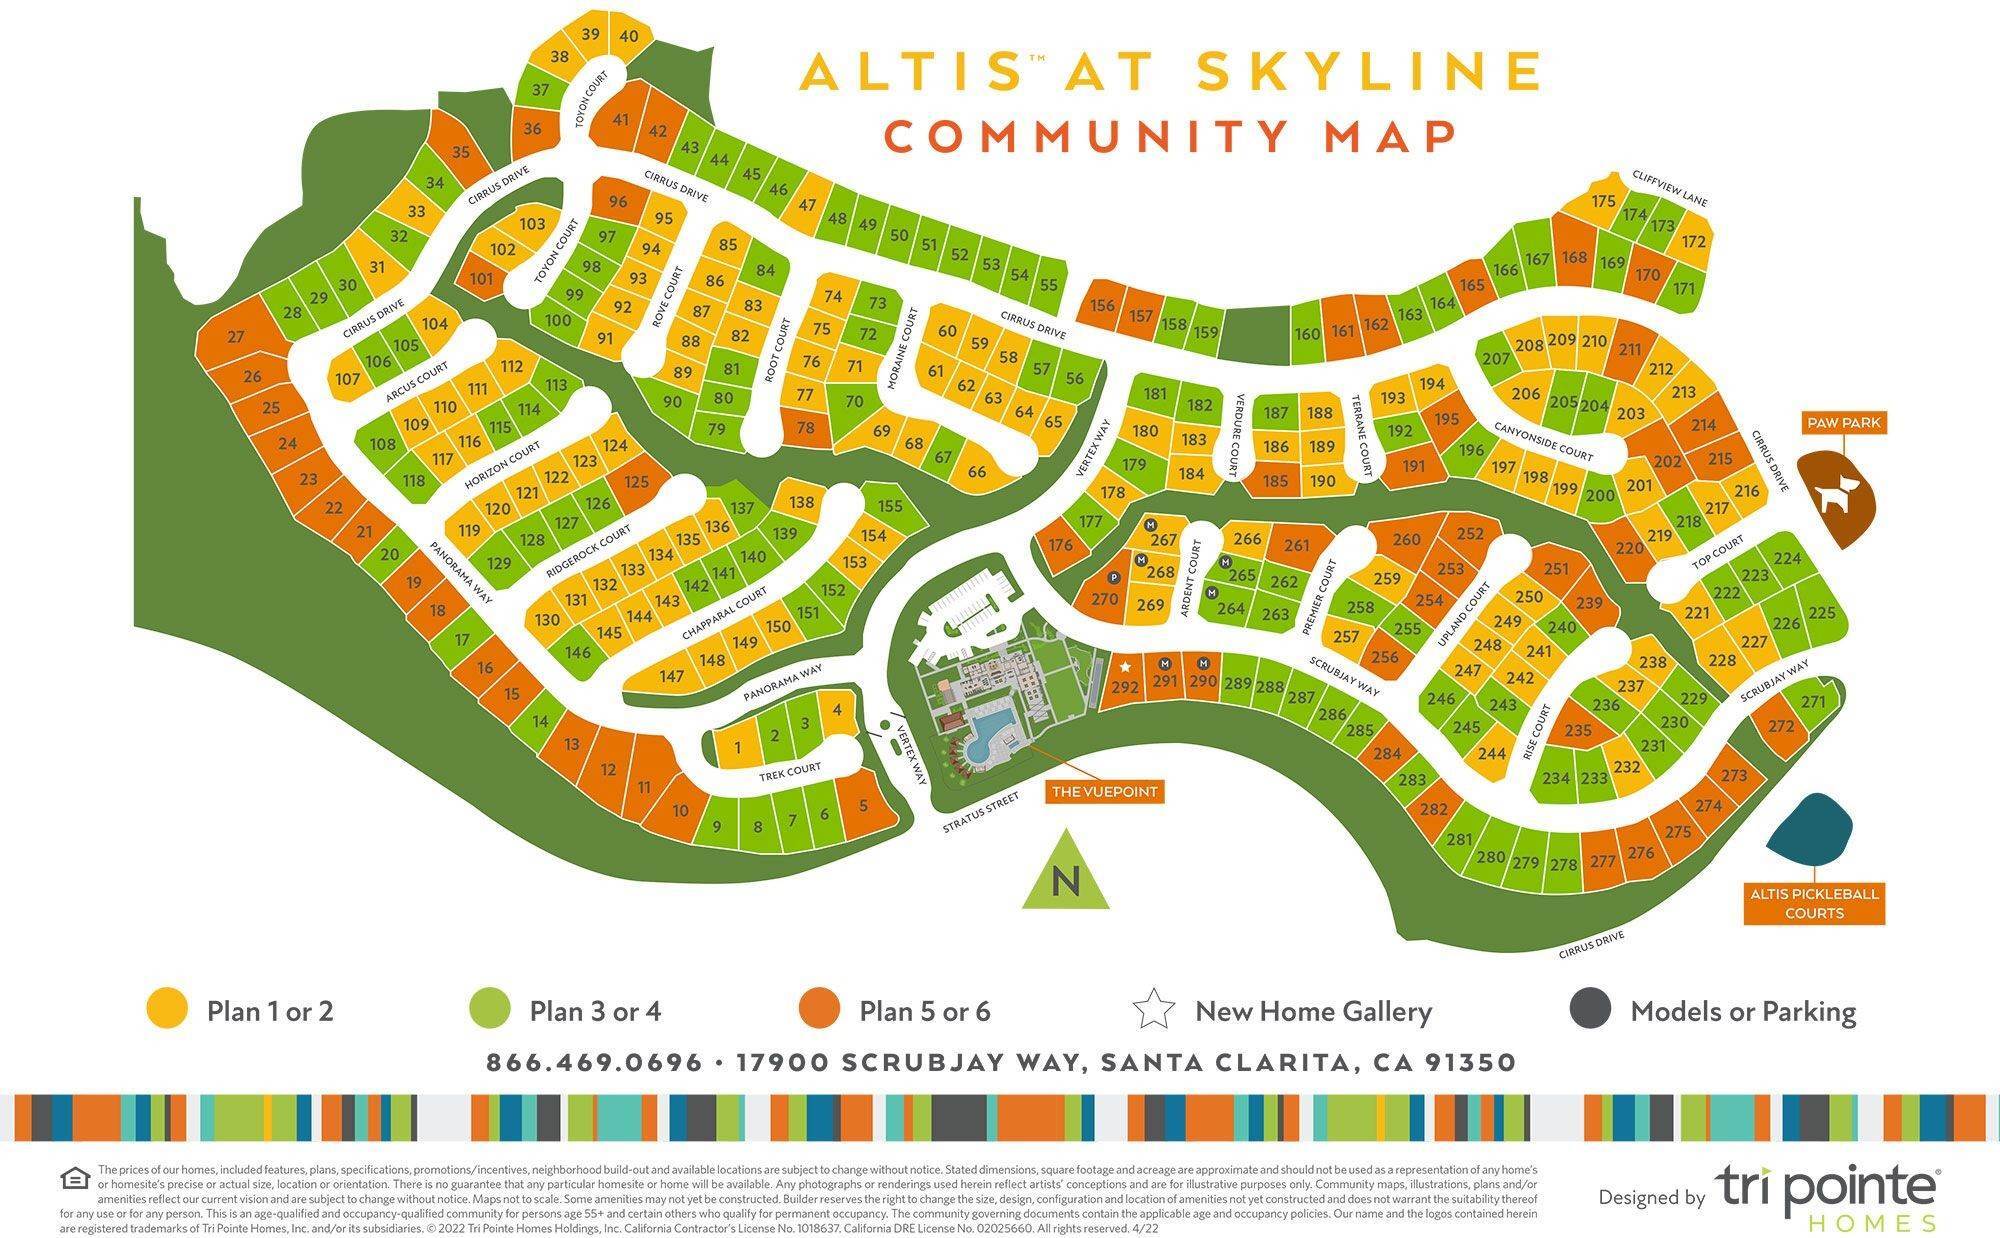 13. Altis at Skyline建于 17900 Scrubjay Way, 圣塔克拉利塔, CA 91351